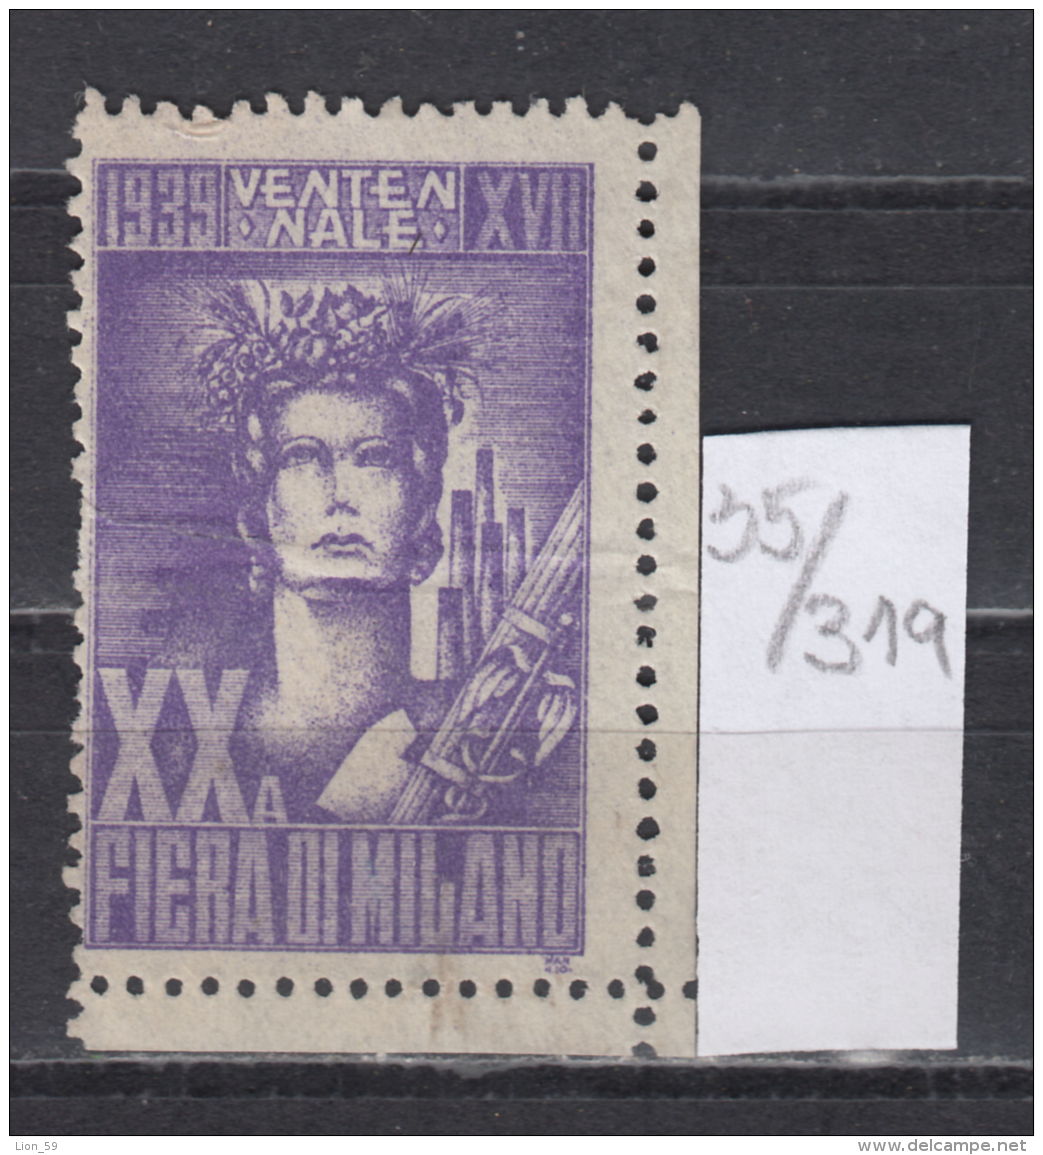 35K319 / 1939 VENTENNALE XVII - XX A FIERA DI MILANO - CINDERELLA LABEL VIGNETTE  Italia Italy Italie Italien Italie - Cinderellas